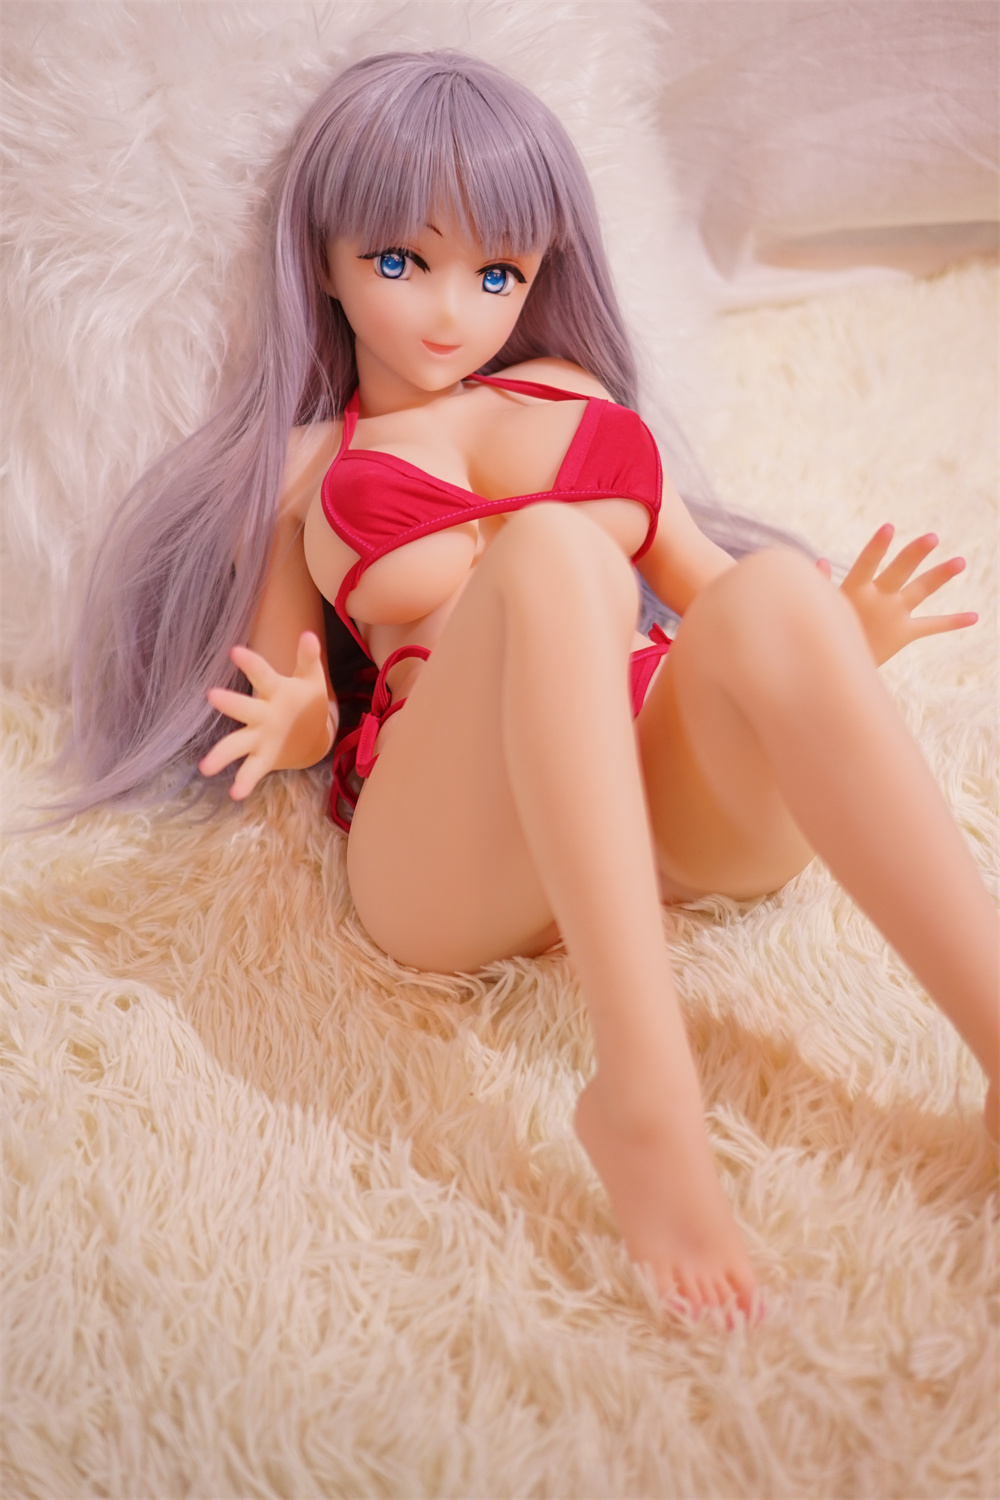 Mini Love Doll YJL DOLL 80cm (2.62') Full Silicone Large Breast - Aya Ne (NO.951) YJL DOLL Littlelovedoll